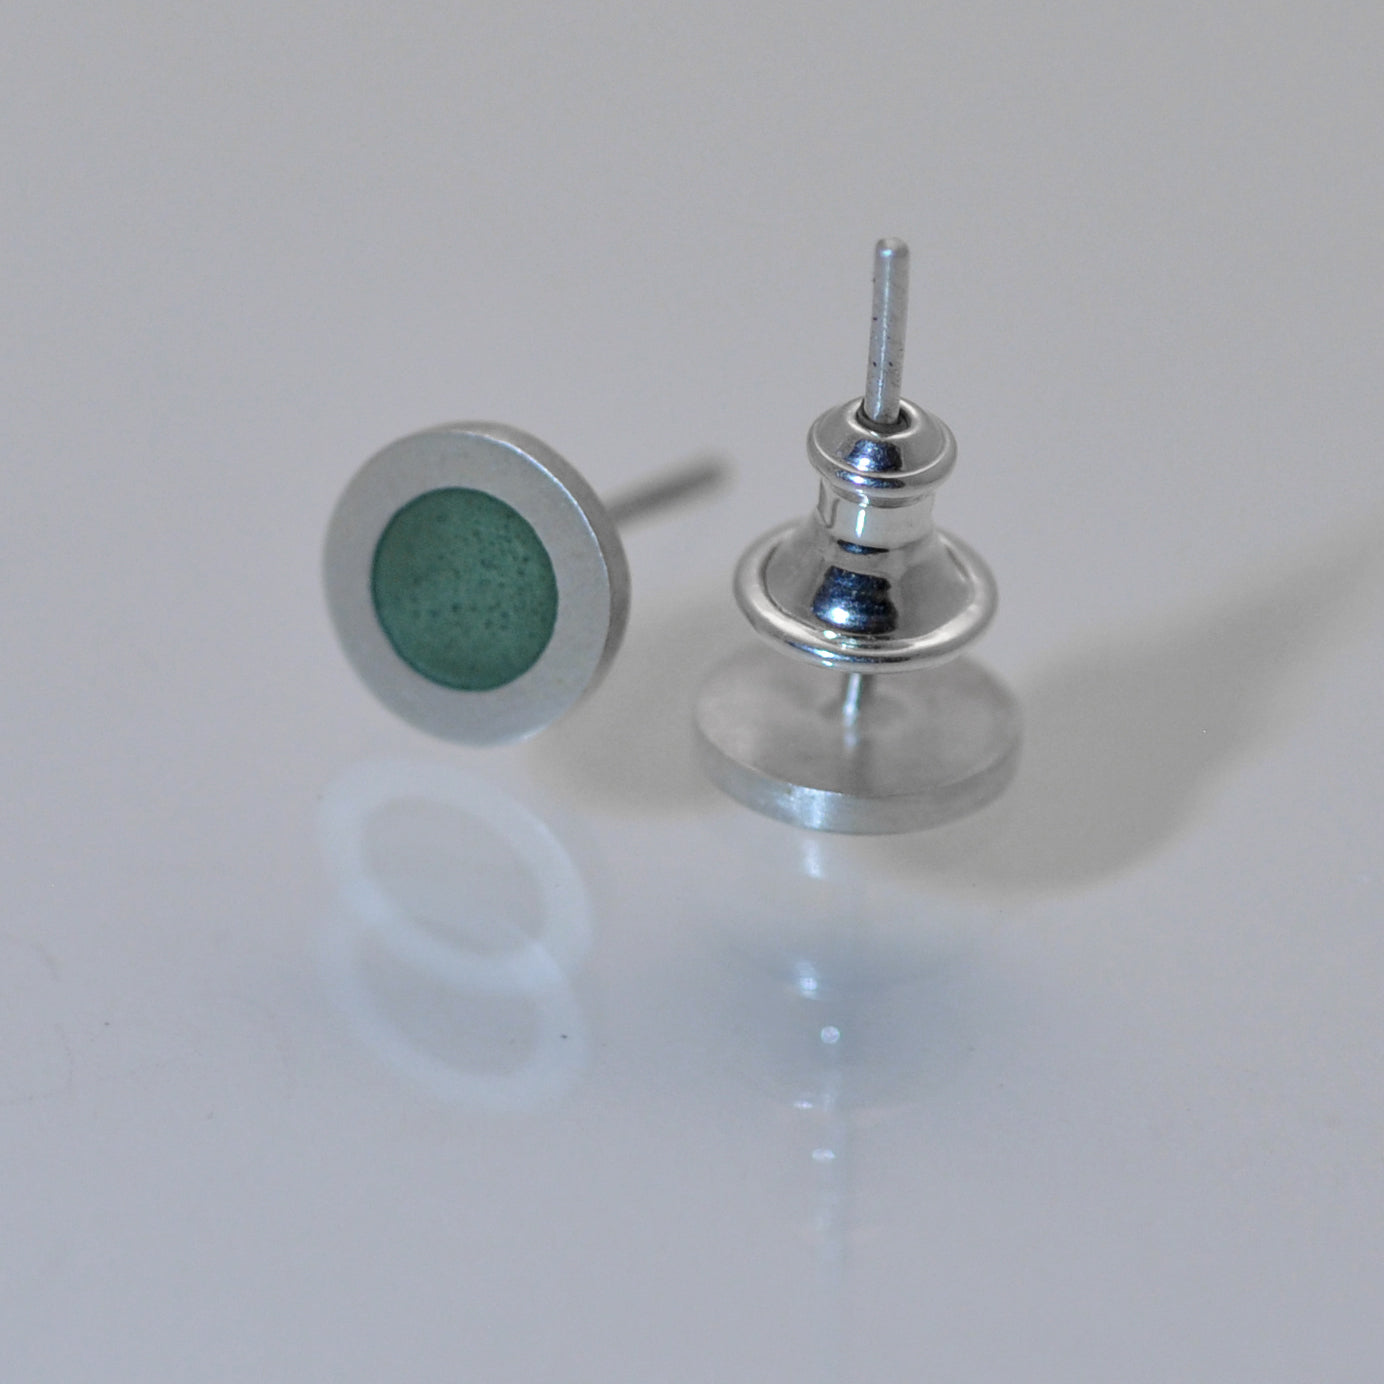 Small round silver flat ear studs, green grey